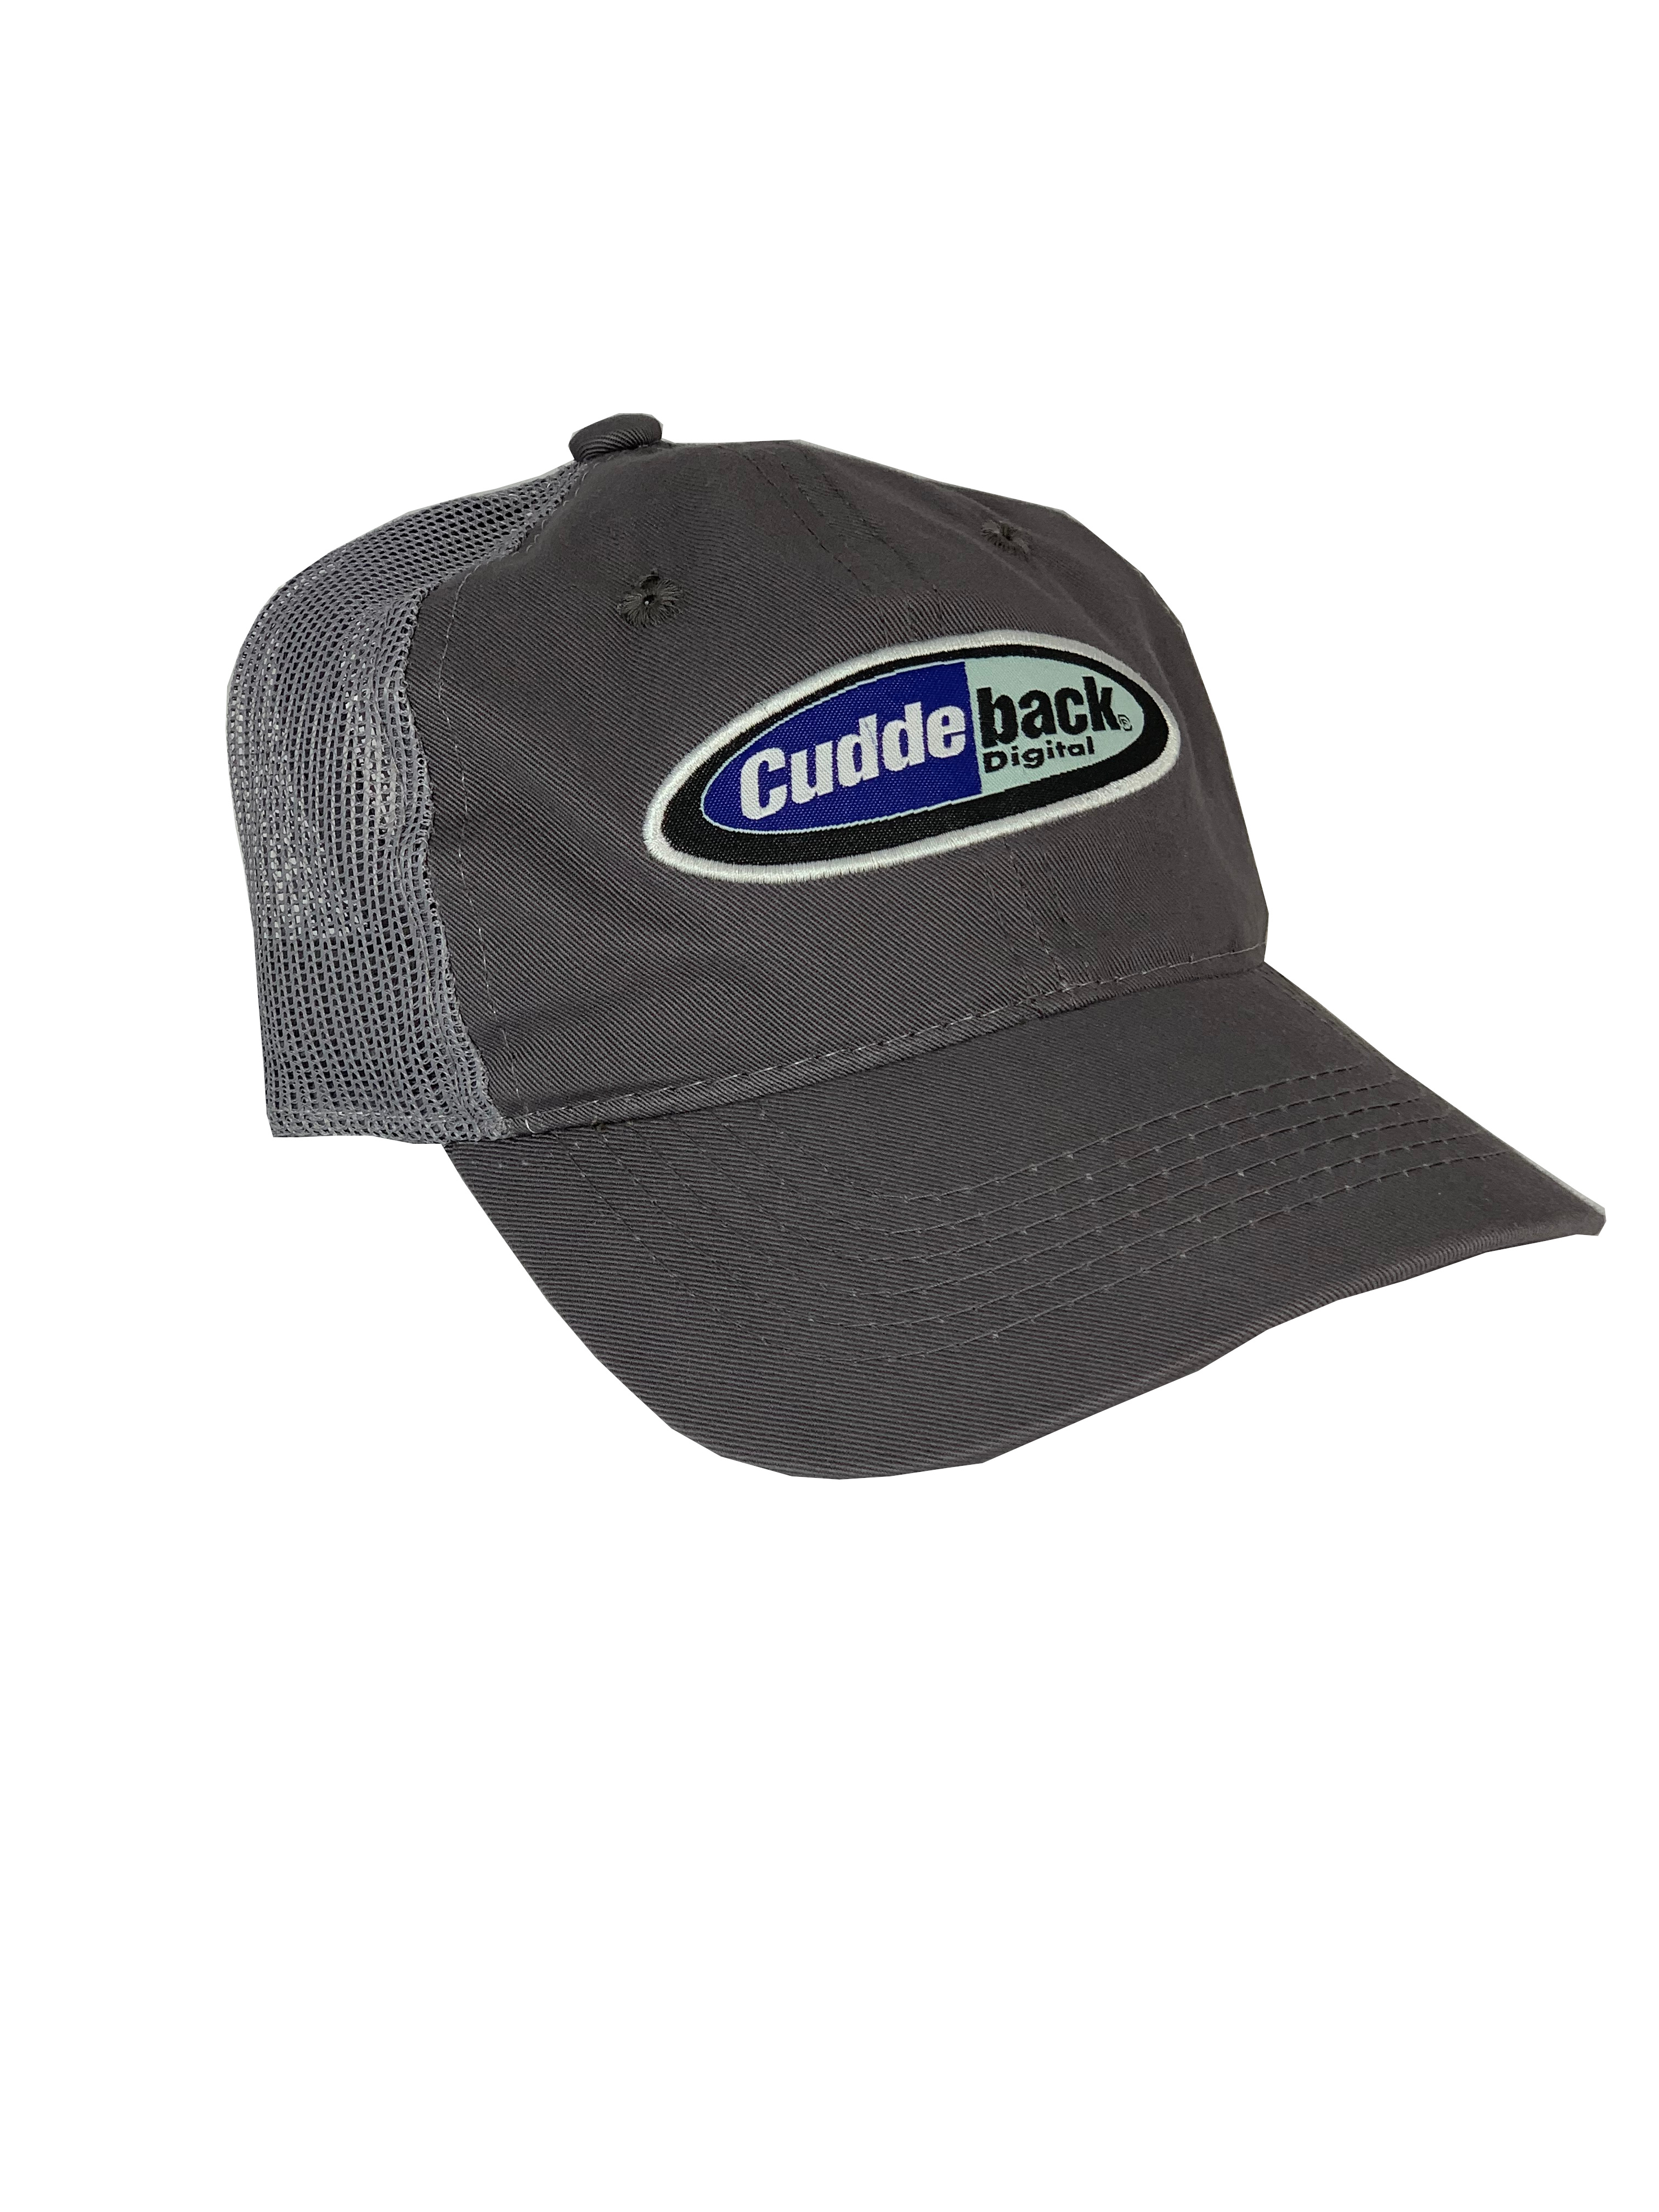 Cuddeback Hat Grey Image